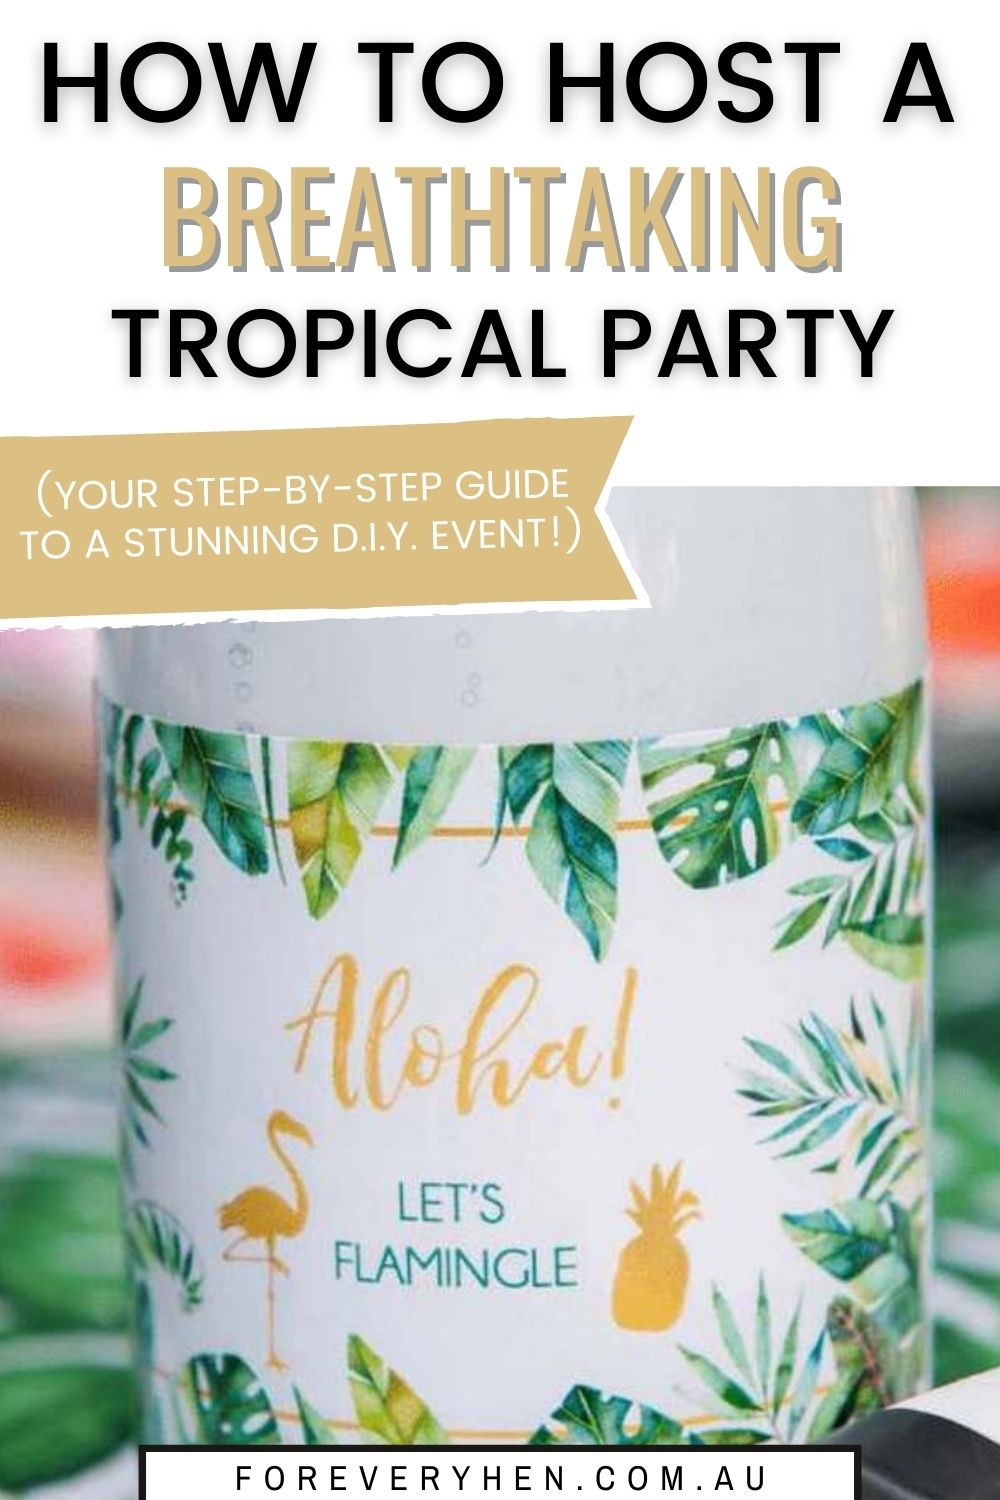 Tropical Picnic Party Pinterest